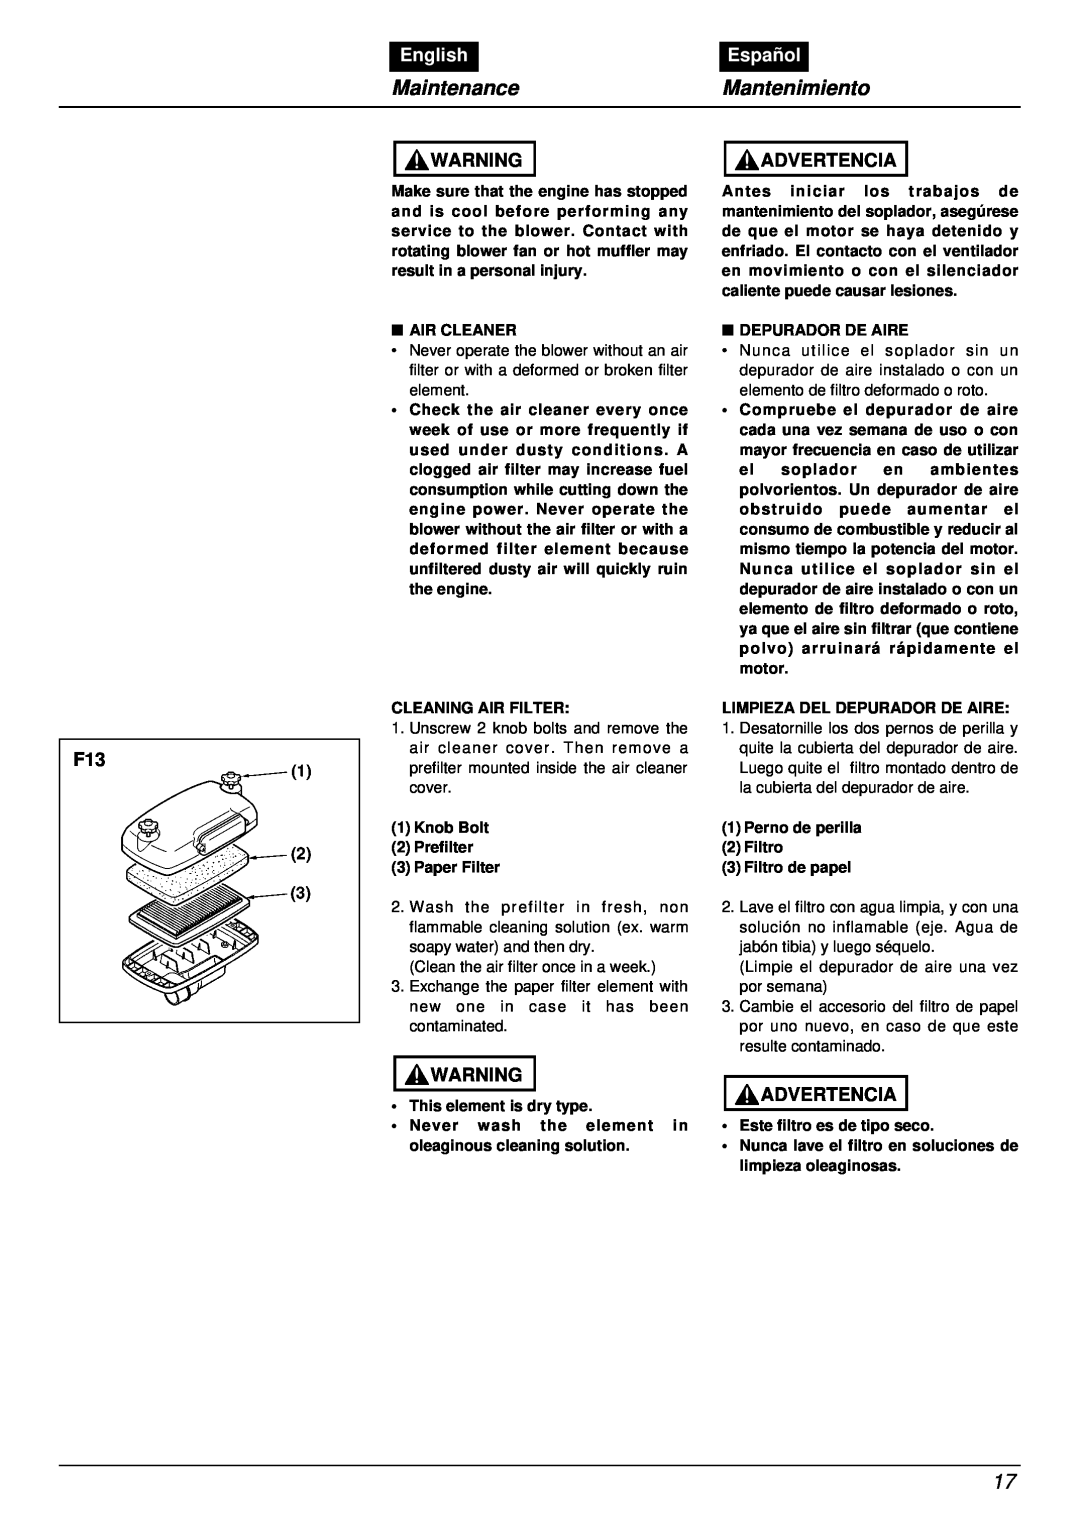 RedMax EB7001RH manual Maintenance, Mantenimiento, Advertencia, English, Español 